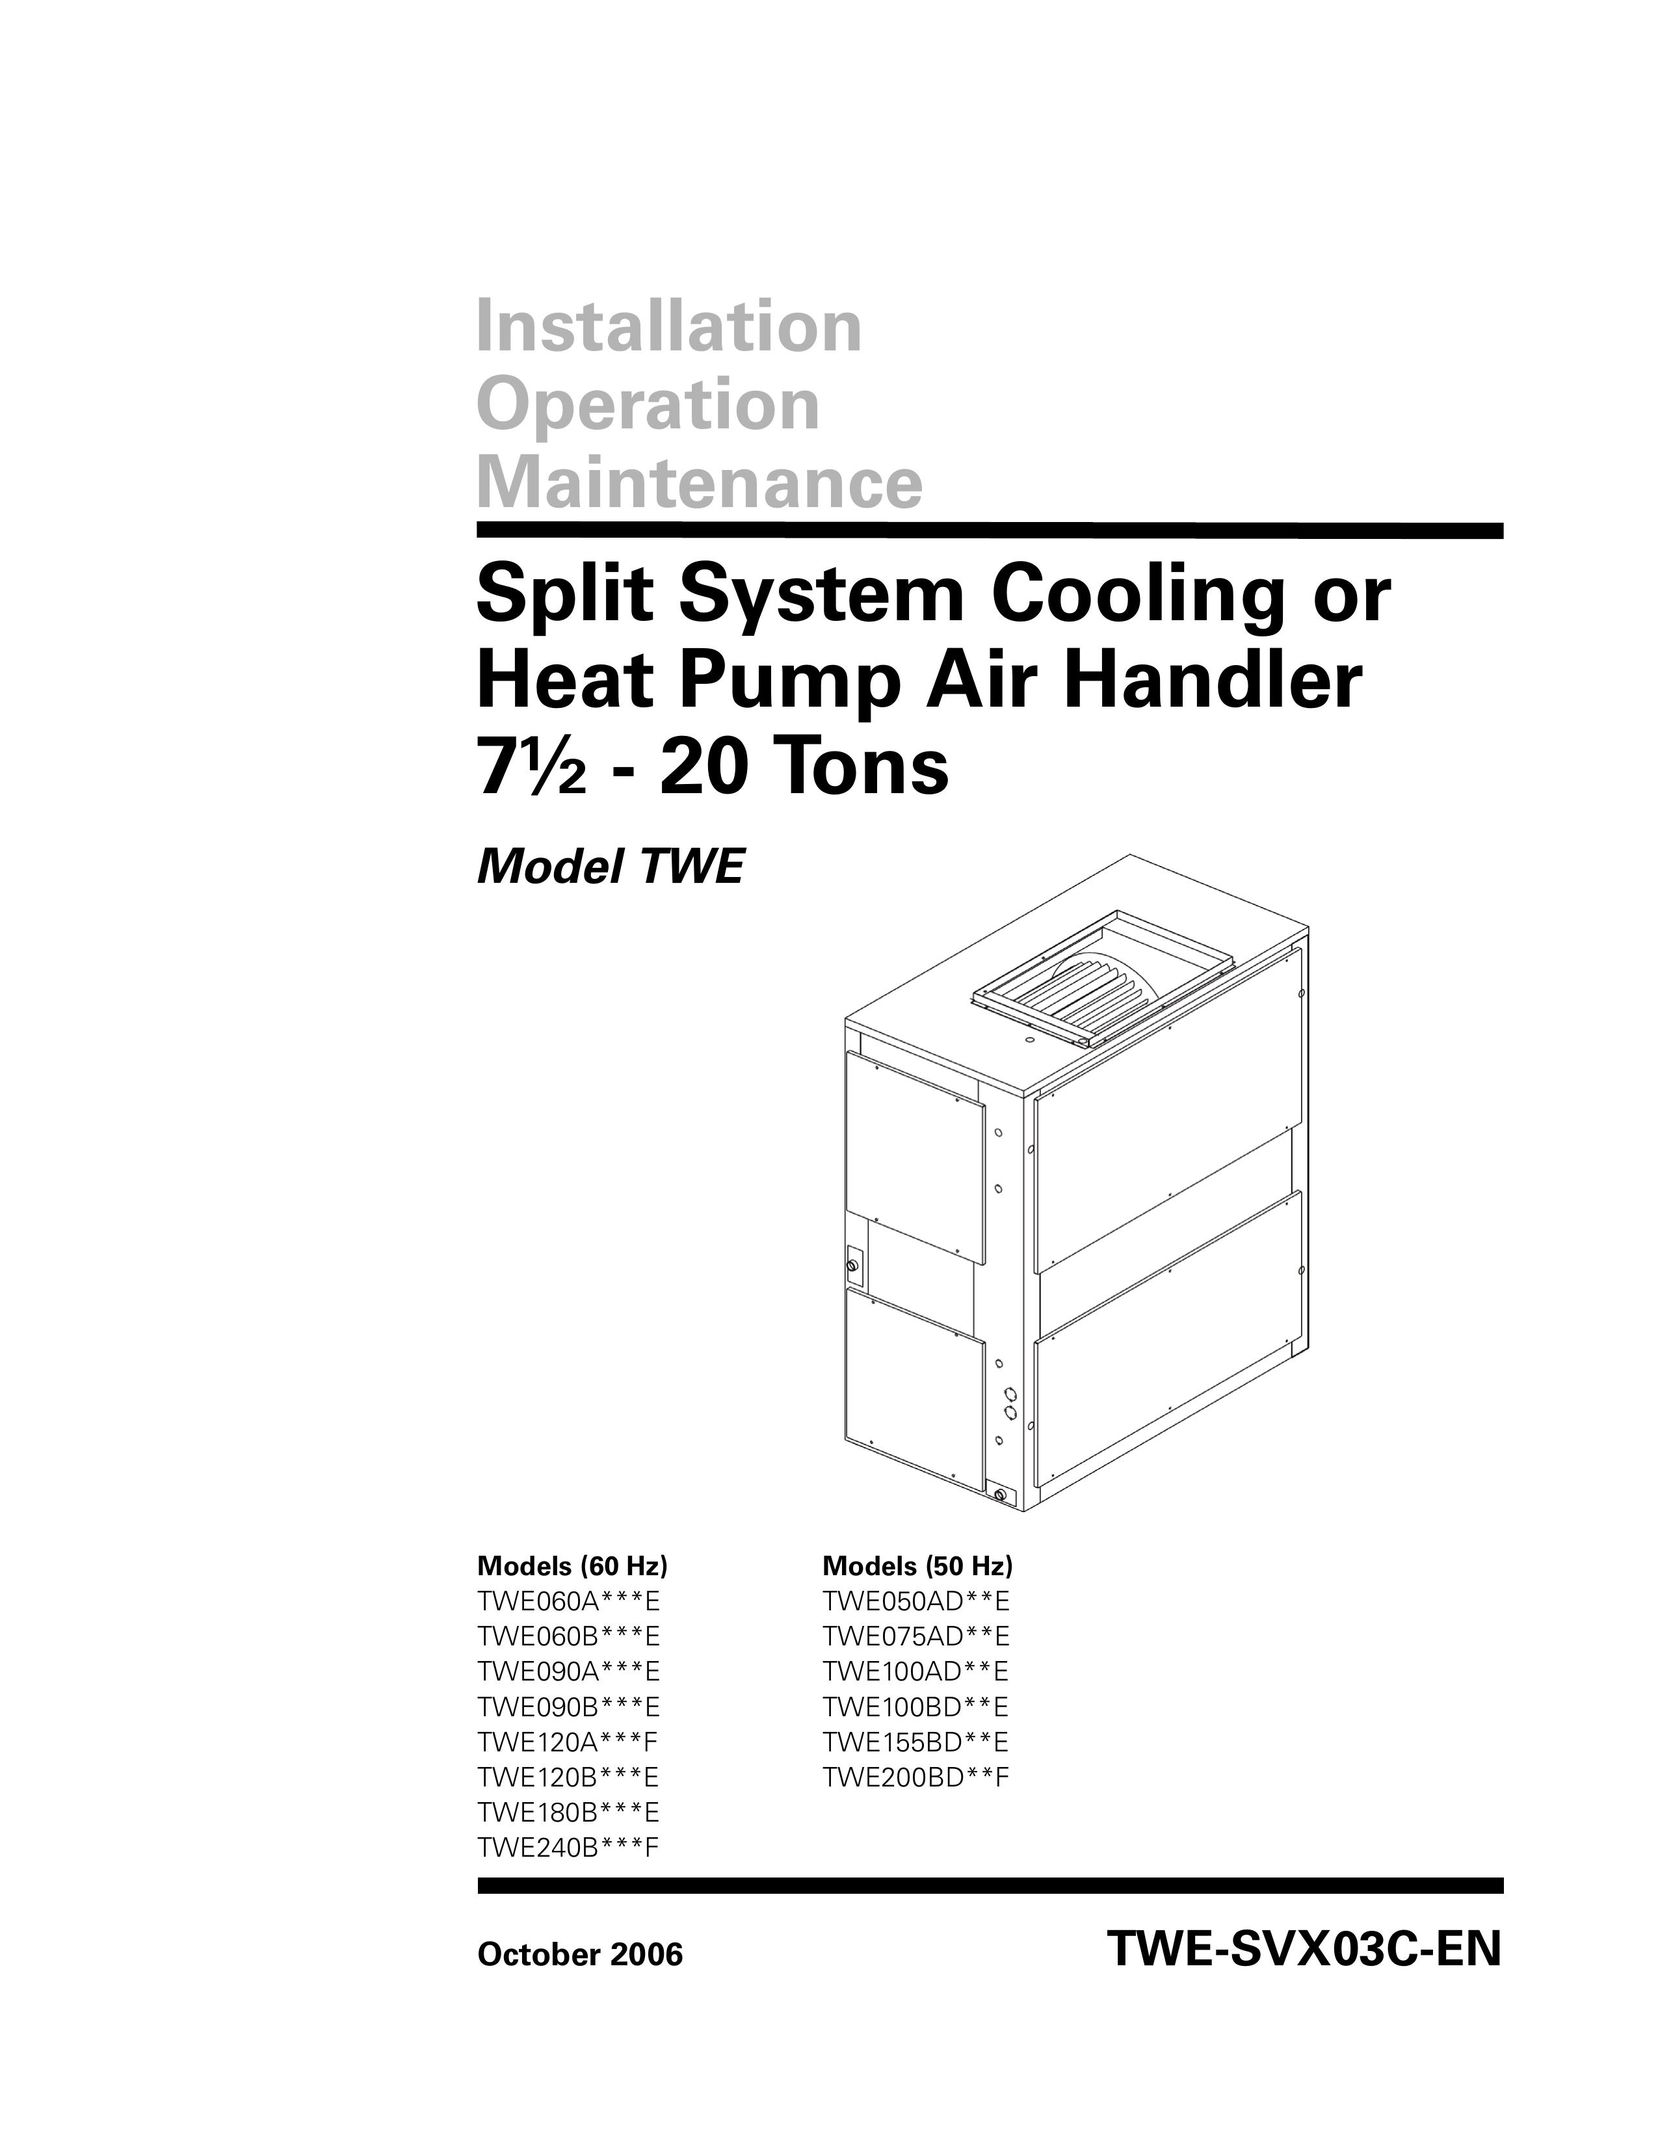 American Standard TWE200BD**F Heat Pump User Manual